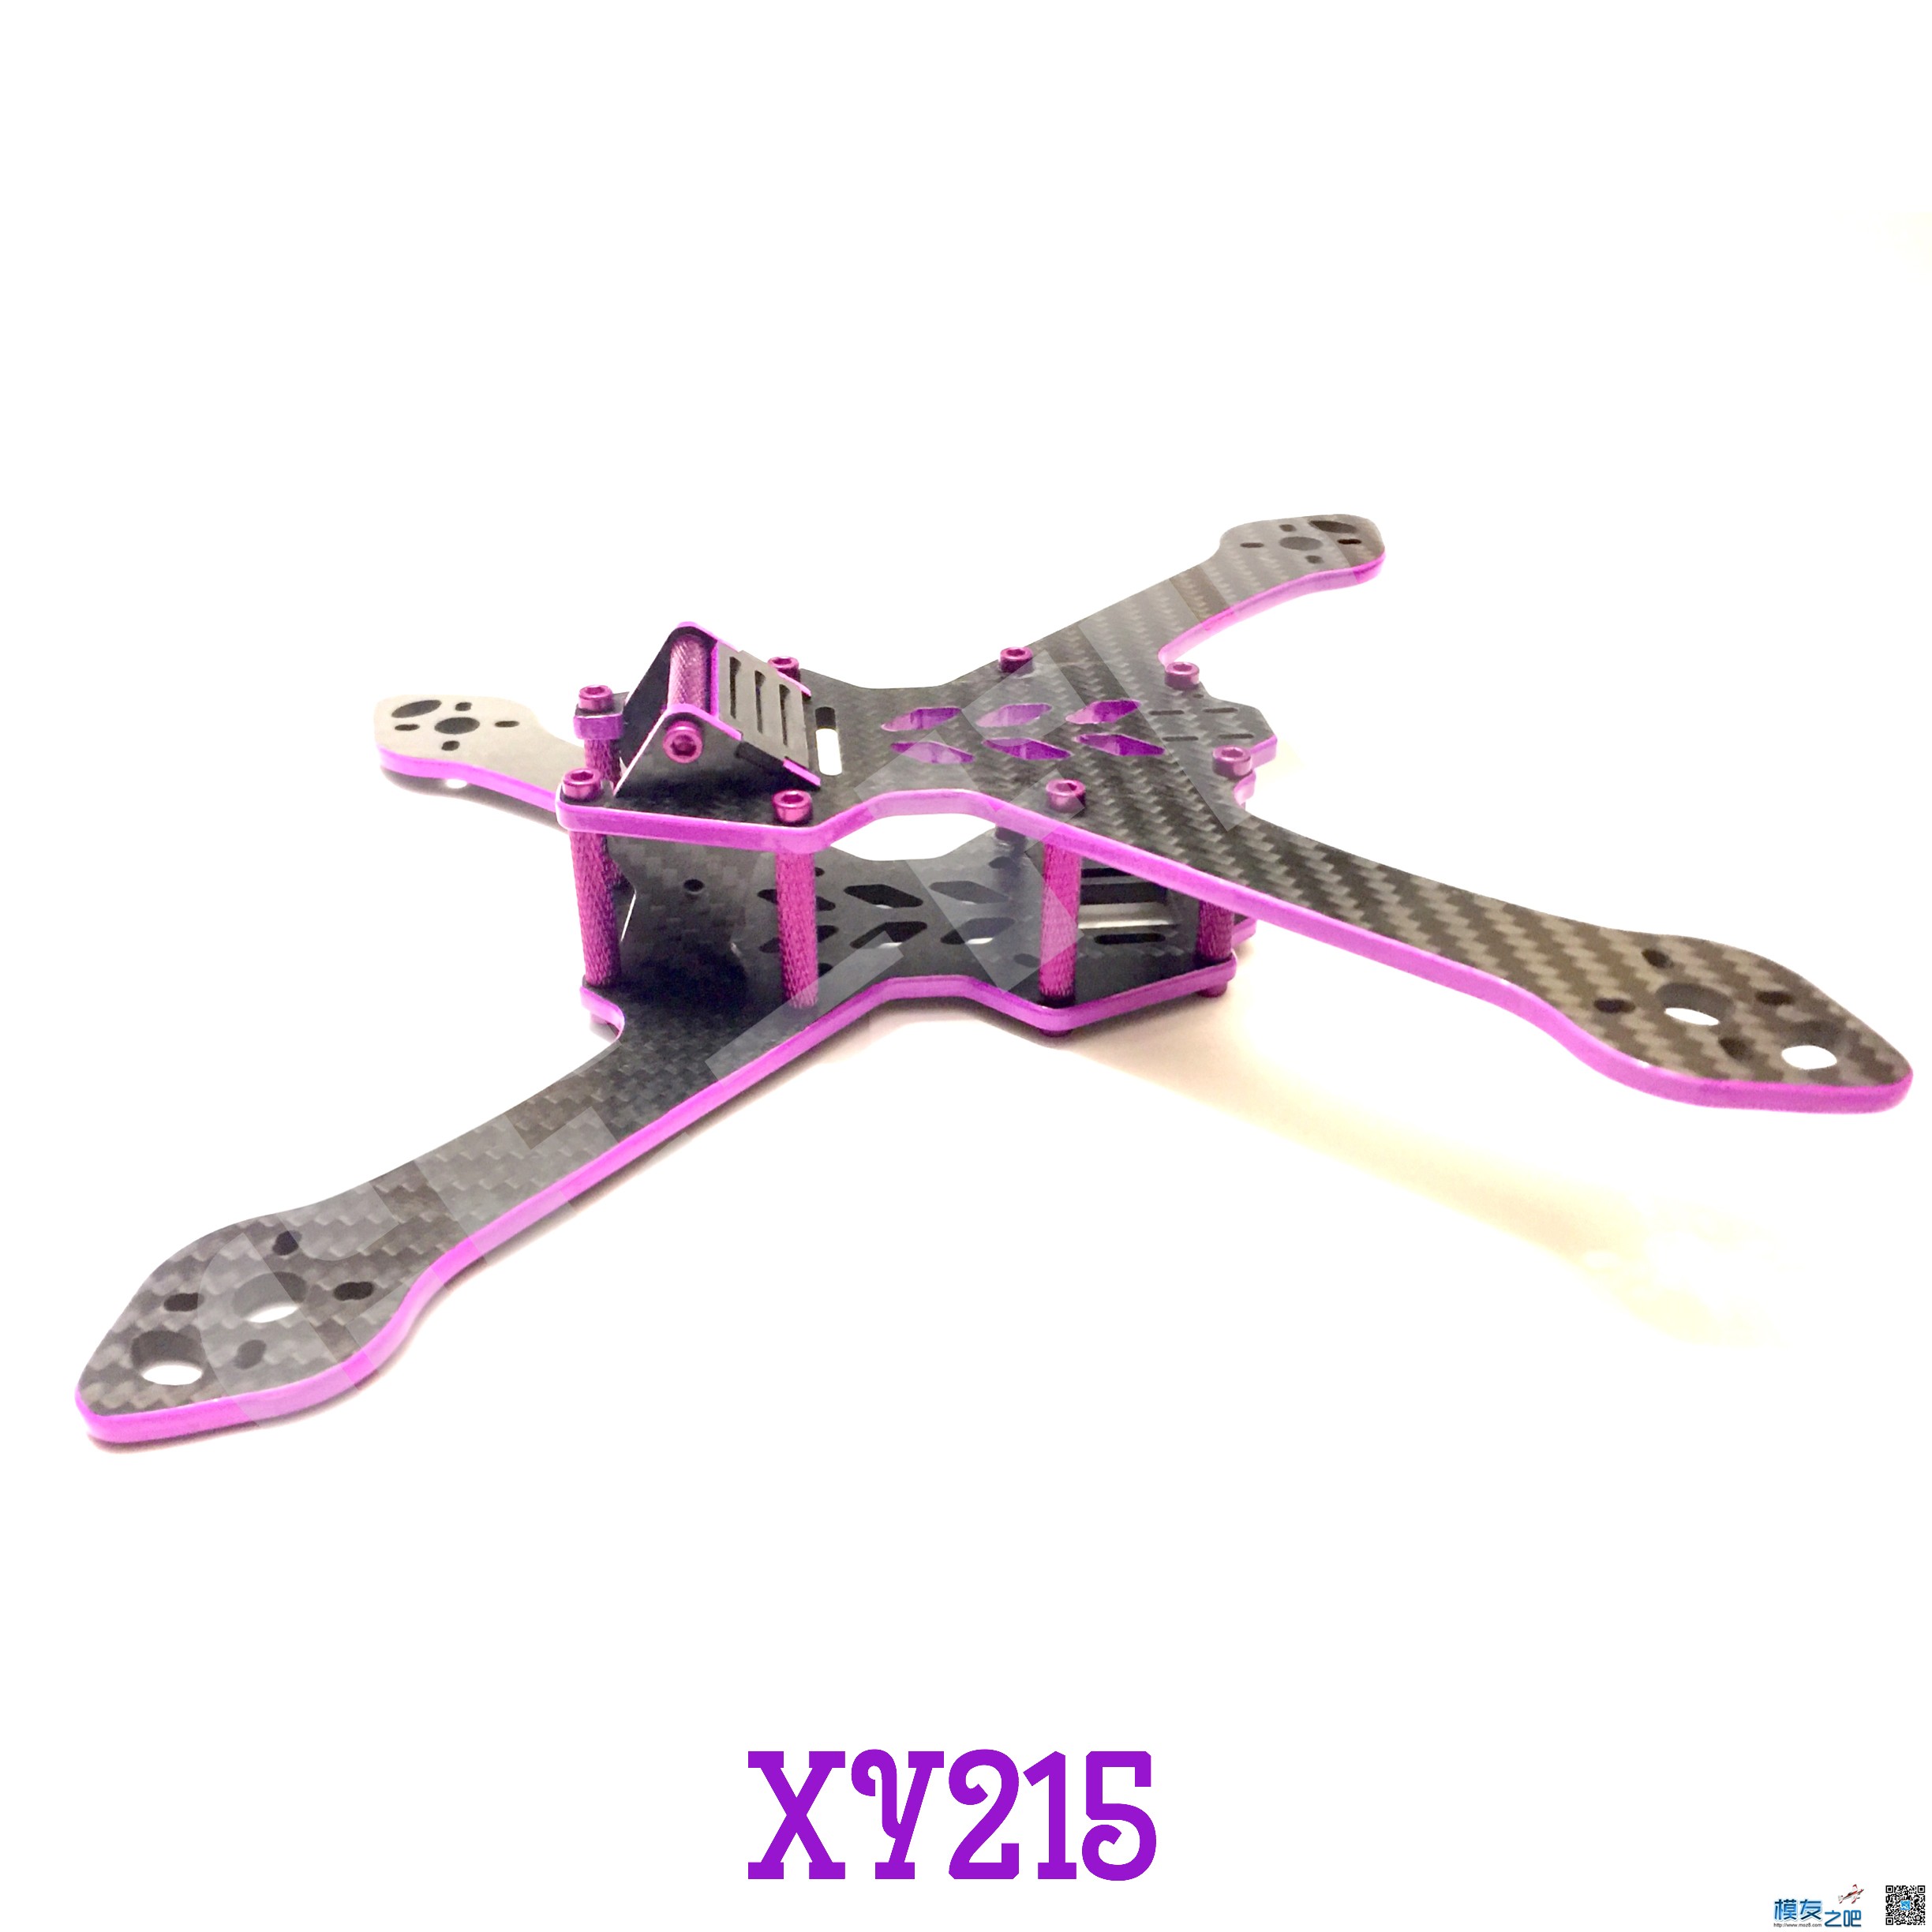 GE-FPV XY215 妖娆紫色涂装 附涂装小教程 穿越机,电机,FPV 作者:GE-FPV 3578 